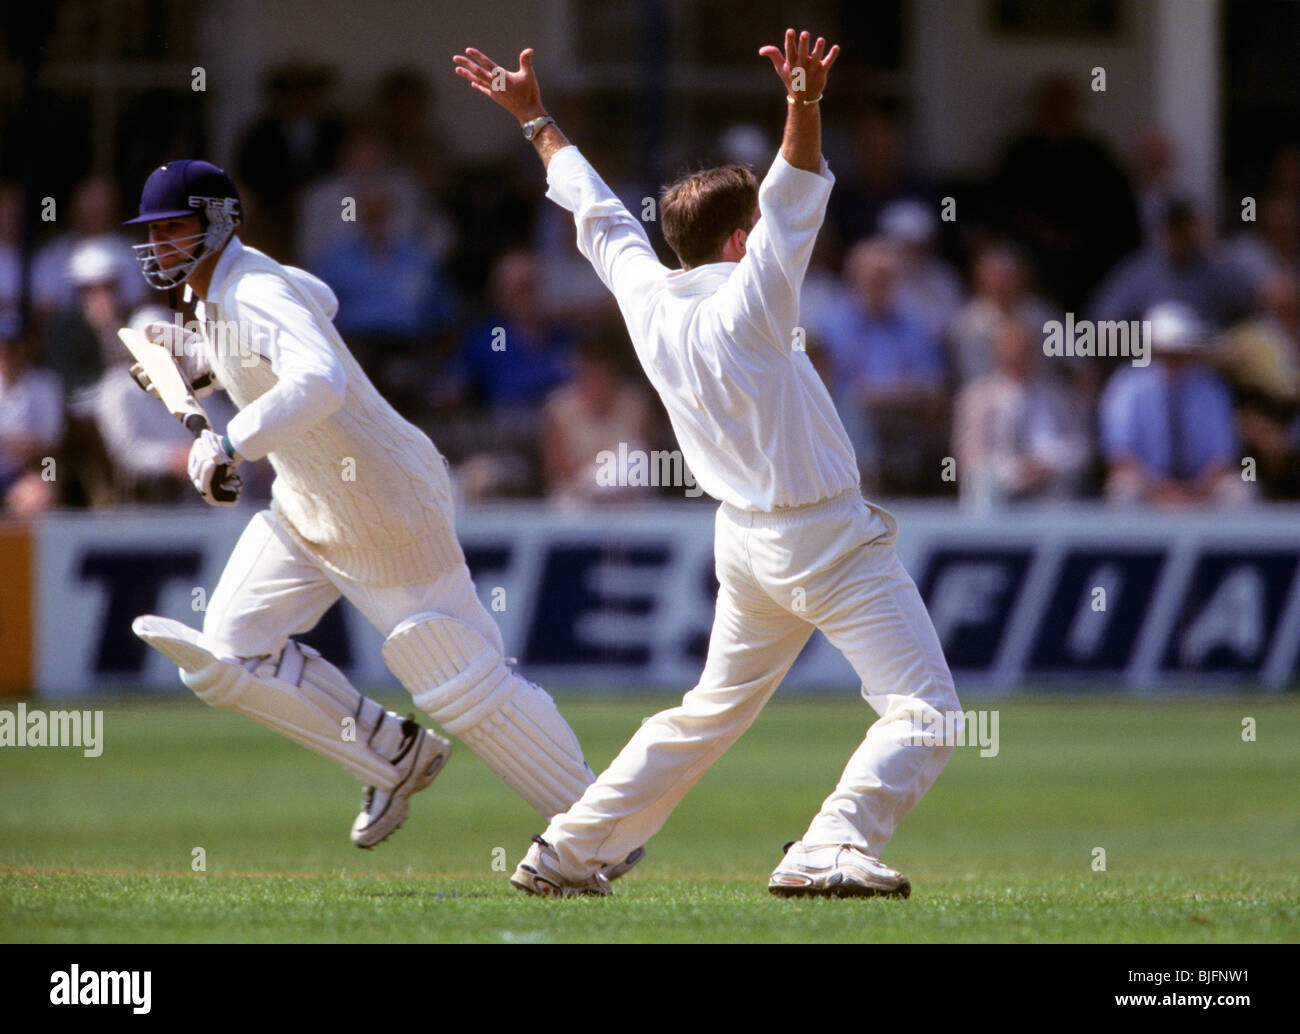 Cricketer celebrating whilst player runs Stock Photo